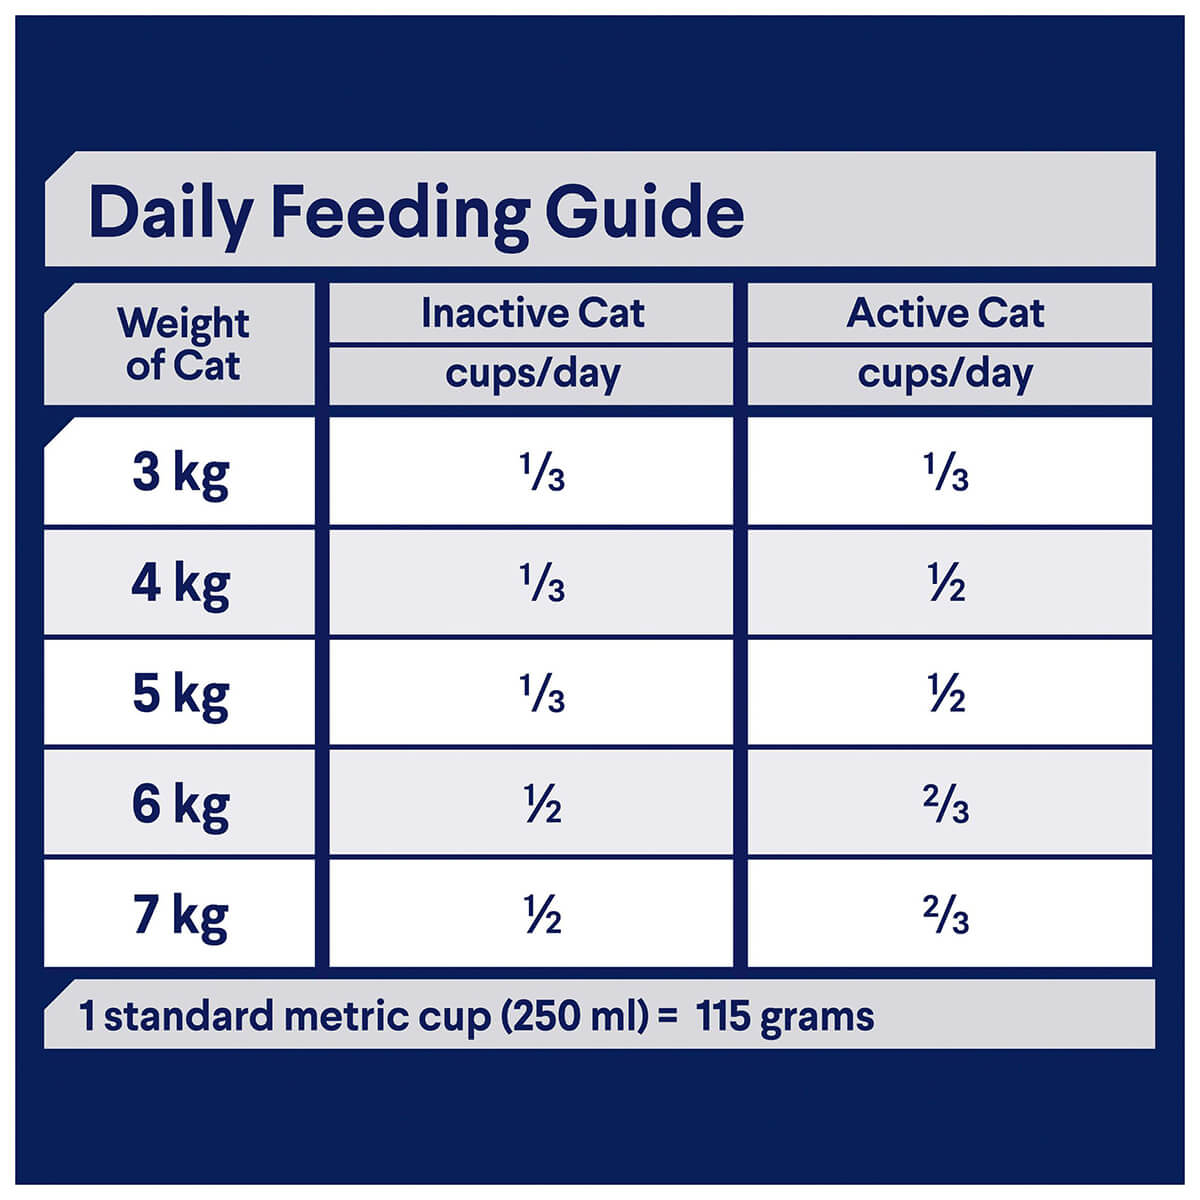 Advance Indoor Adult Chicken Dry Cat Food 2kg